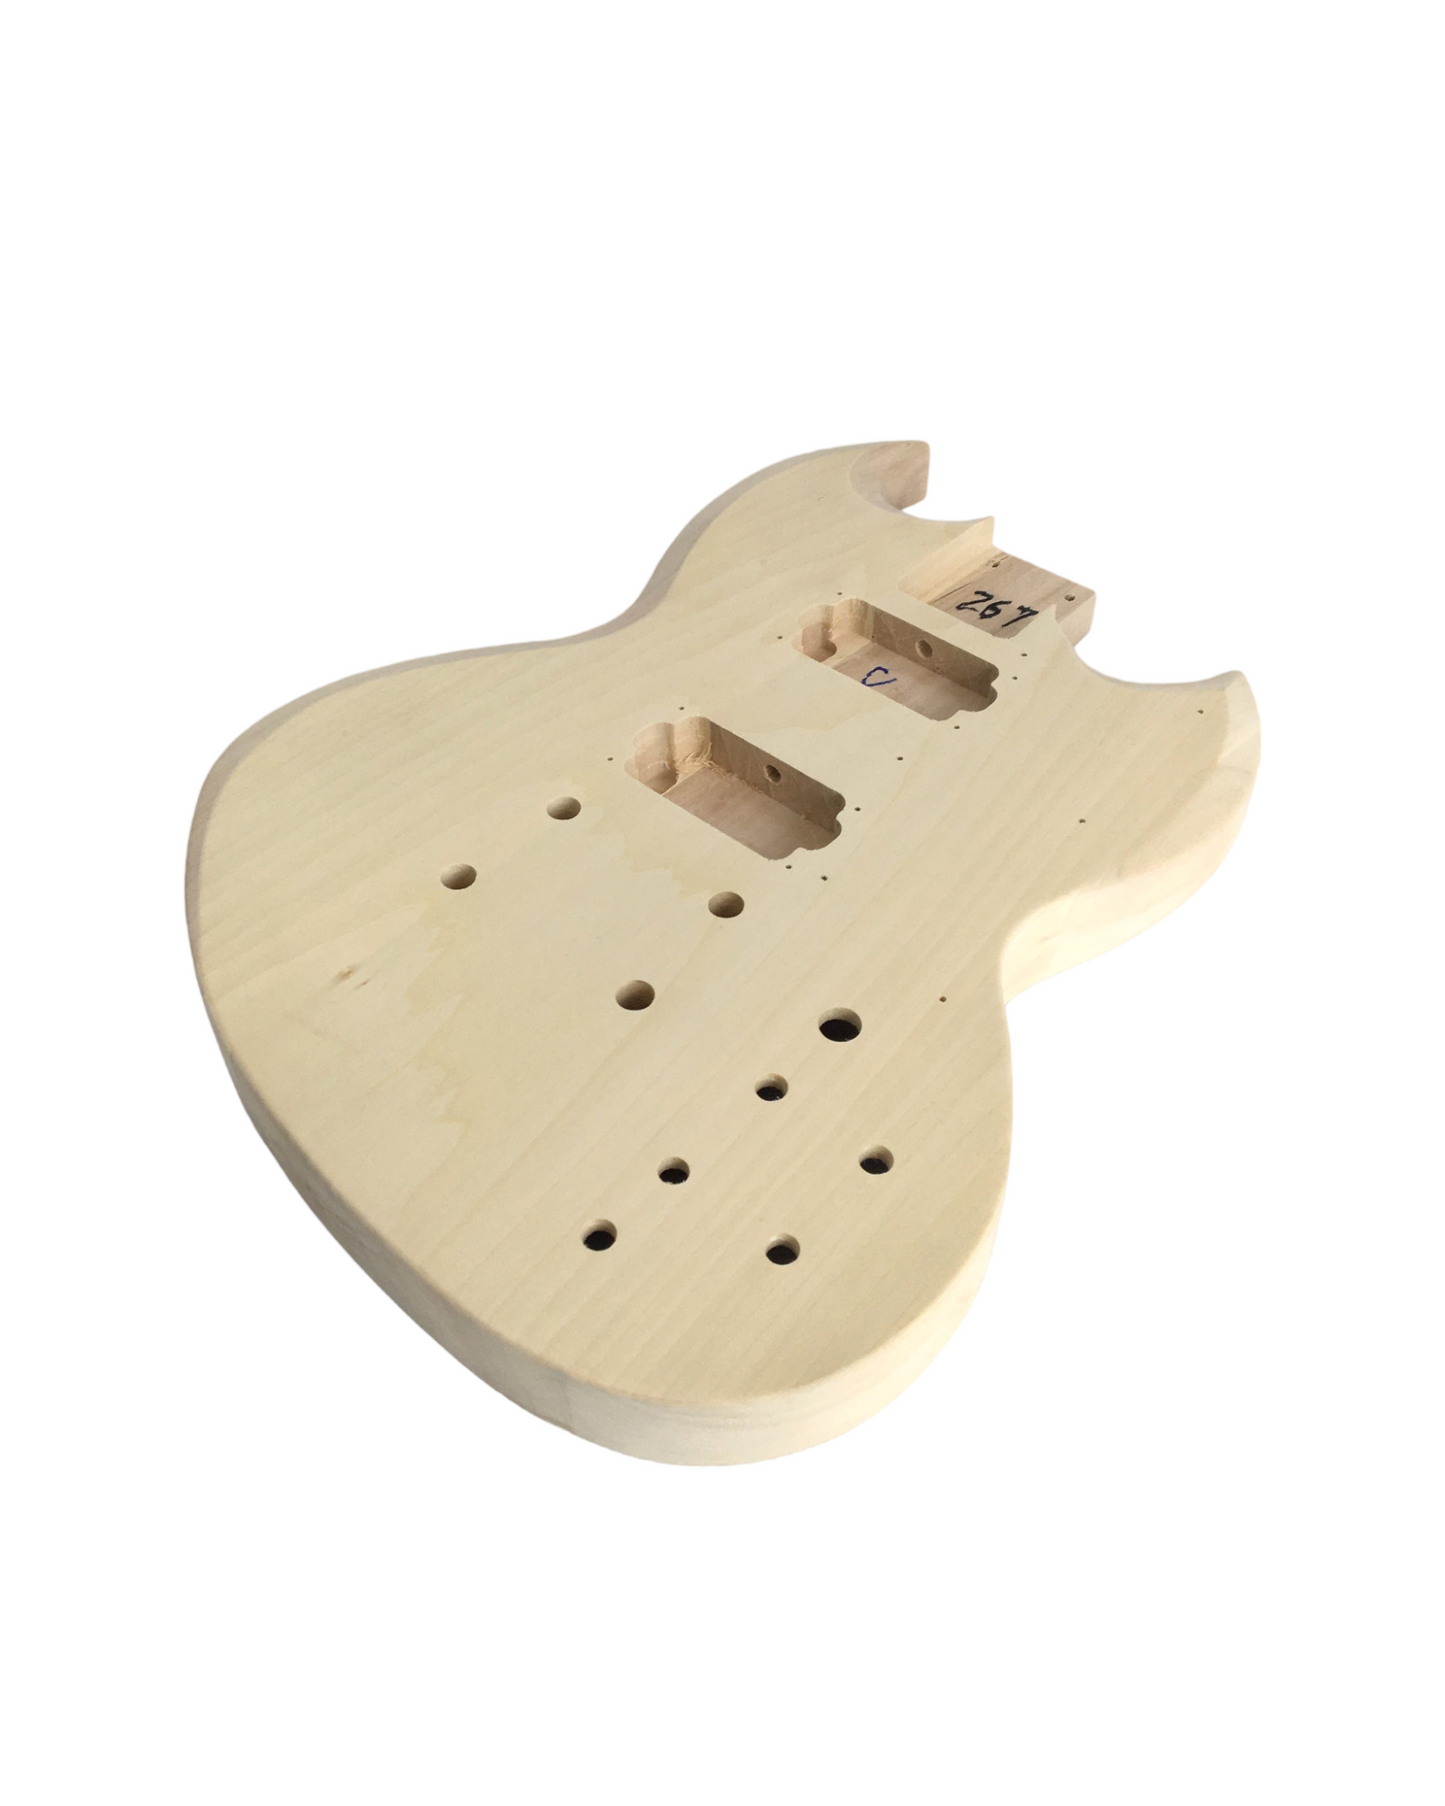 HSSG19205DIY Electric Guitar DIY Kit, Solid Basswood Body+Neck, No-Soldering, H-H